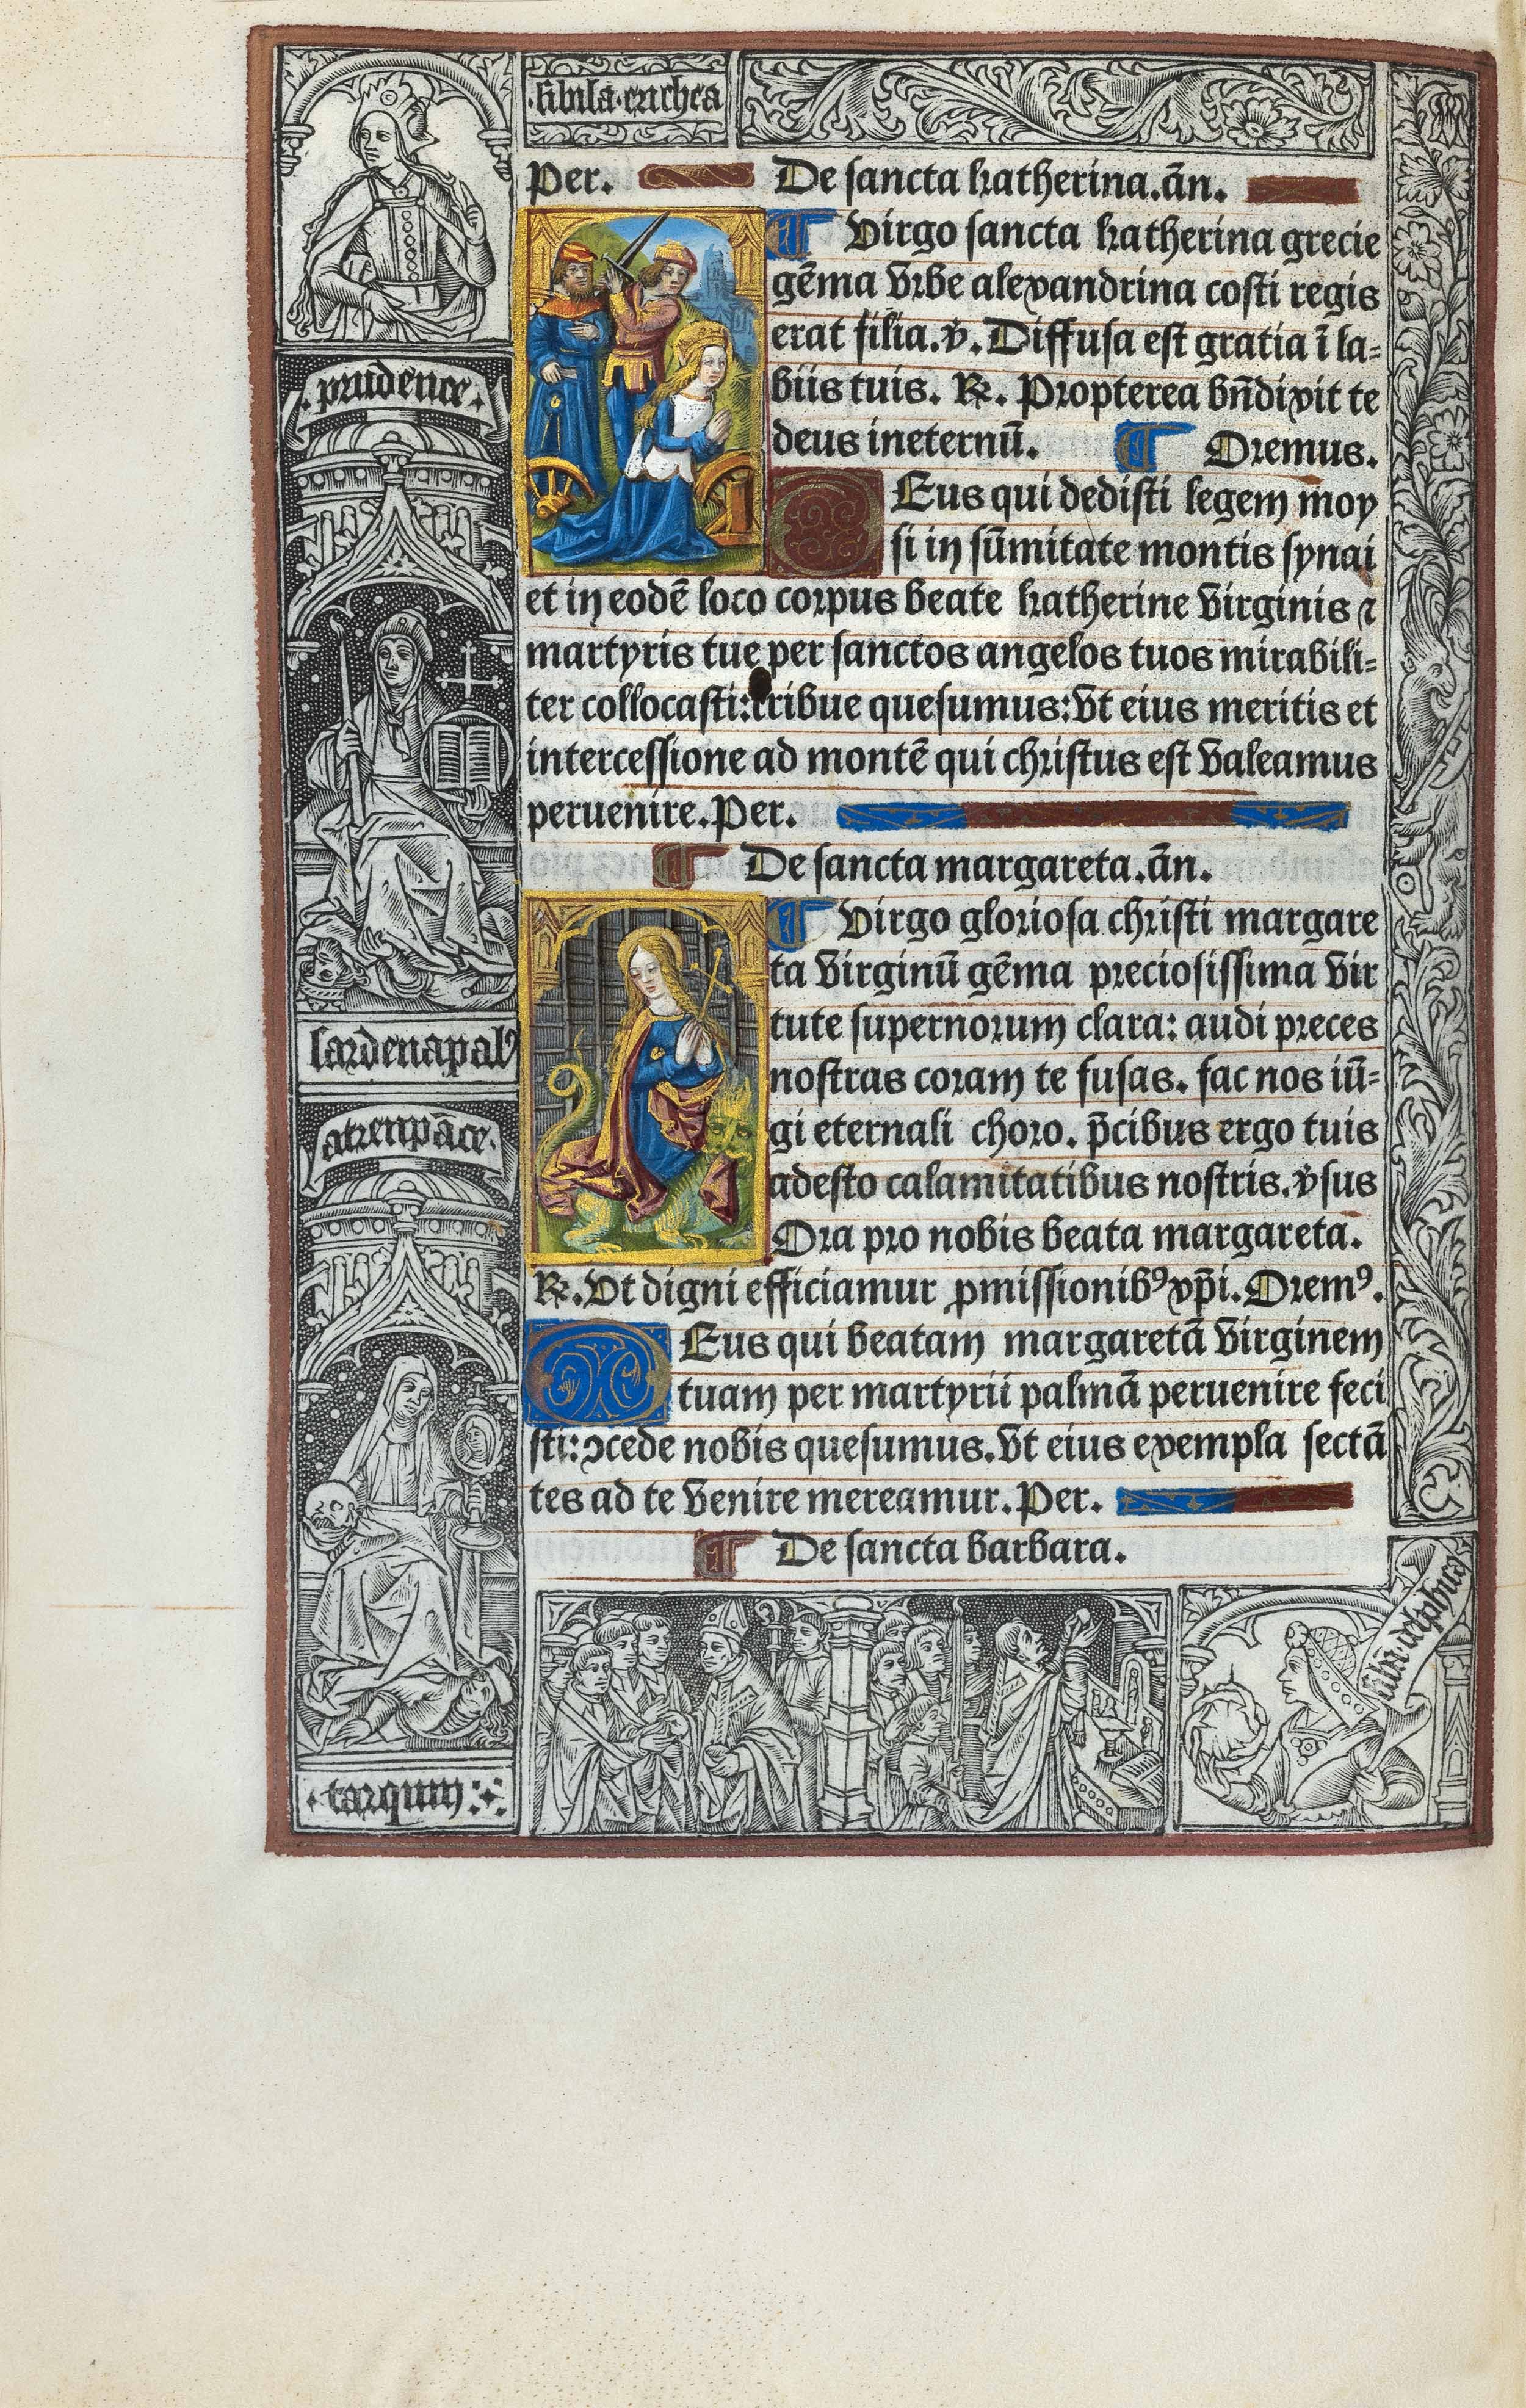 horae-bmv-16.9.1498-printed-book-of-hours-pigouchet-vostre-calixto crotus-illuminated-vellum-doheny-arcana-61.jpg